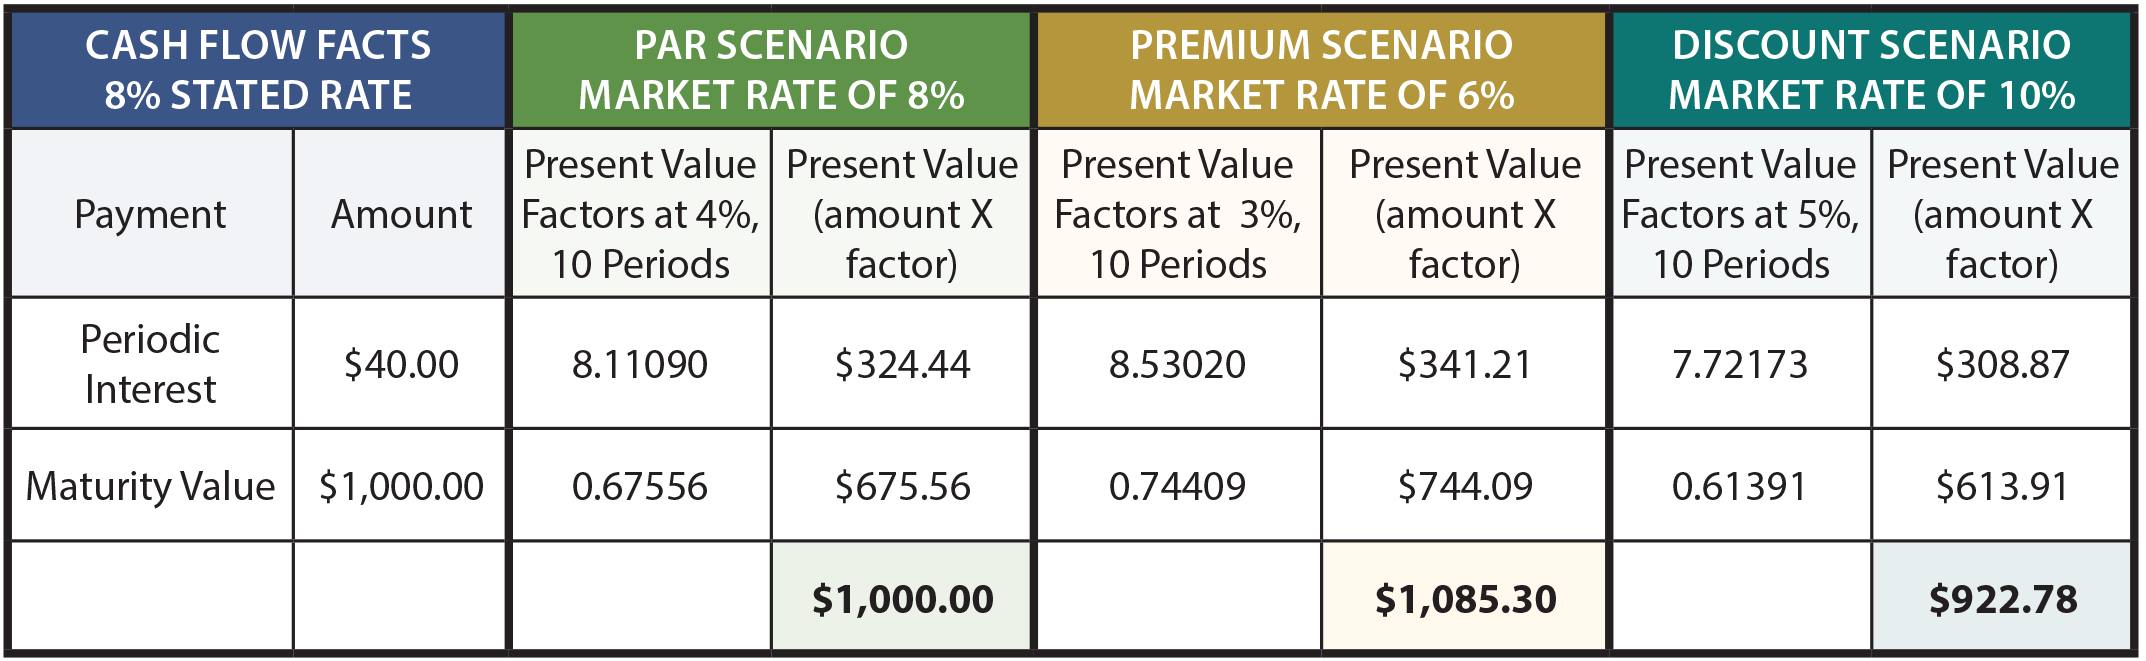 Price Calculation for Scenarios